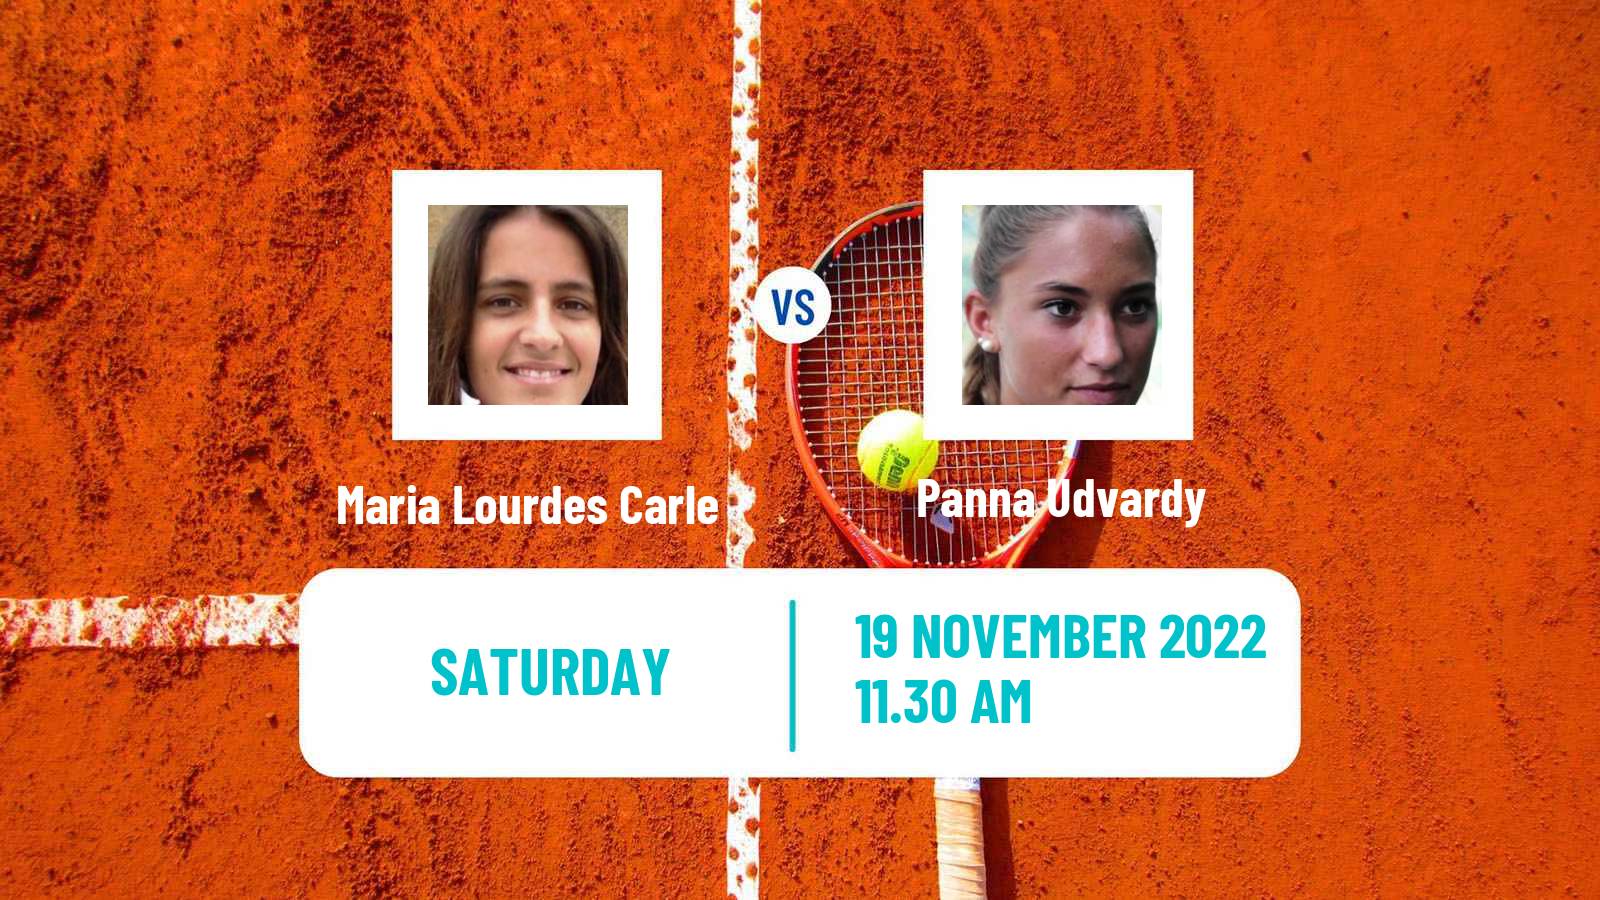 Tennis ATP Challenger Maria Lourdes Carle - Panna Udvardy